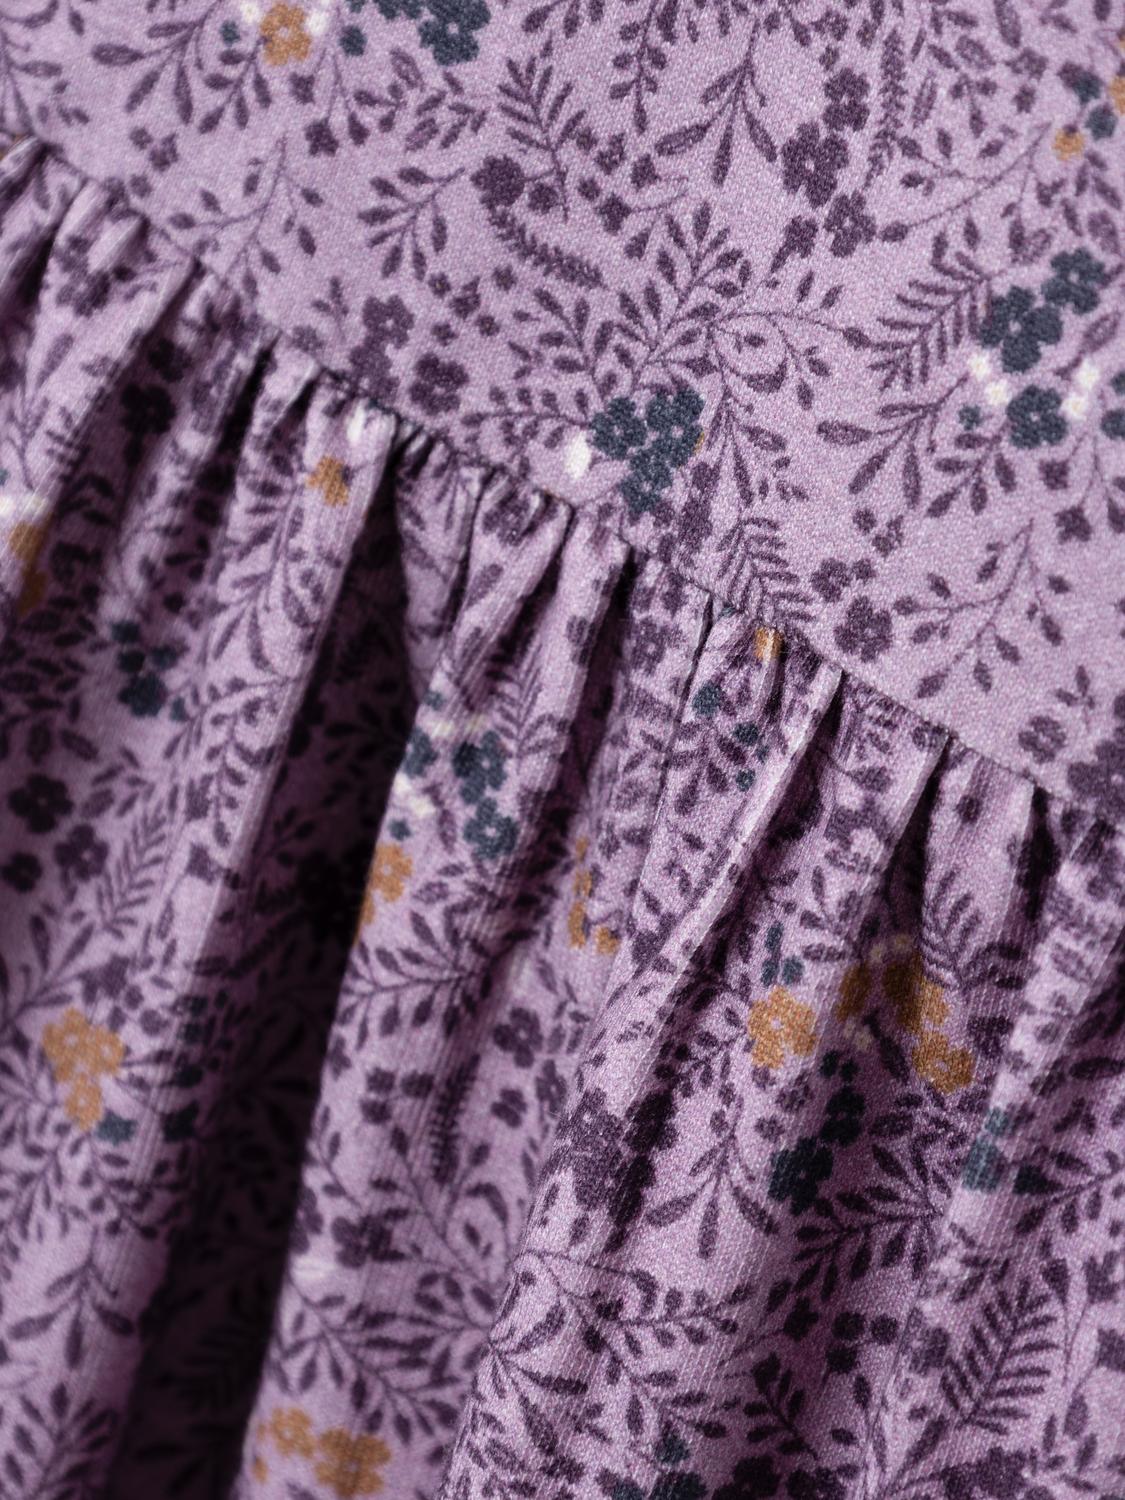 NBFSOBIA Dresses - Lavender Mist